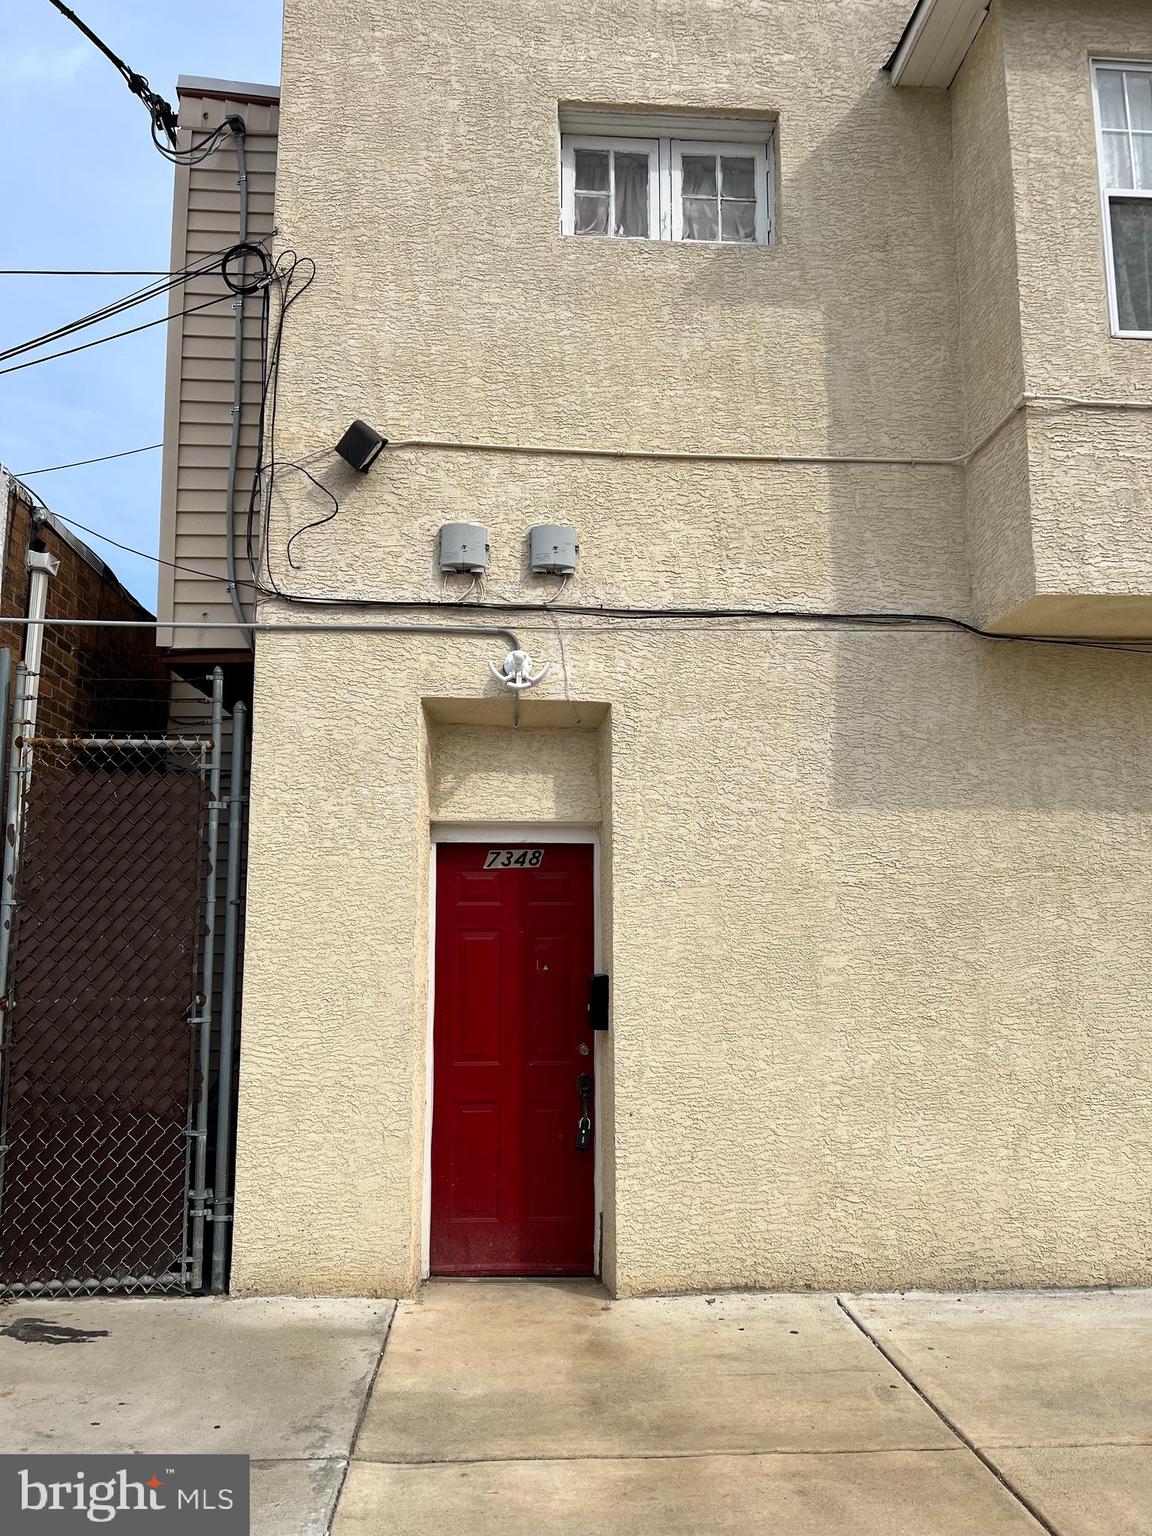 a building with a door